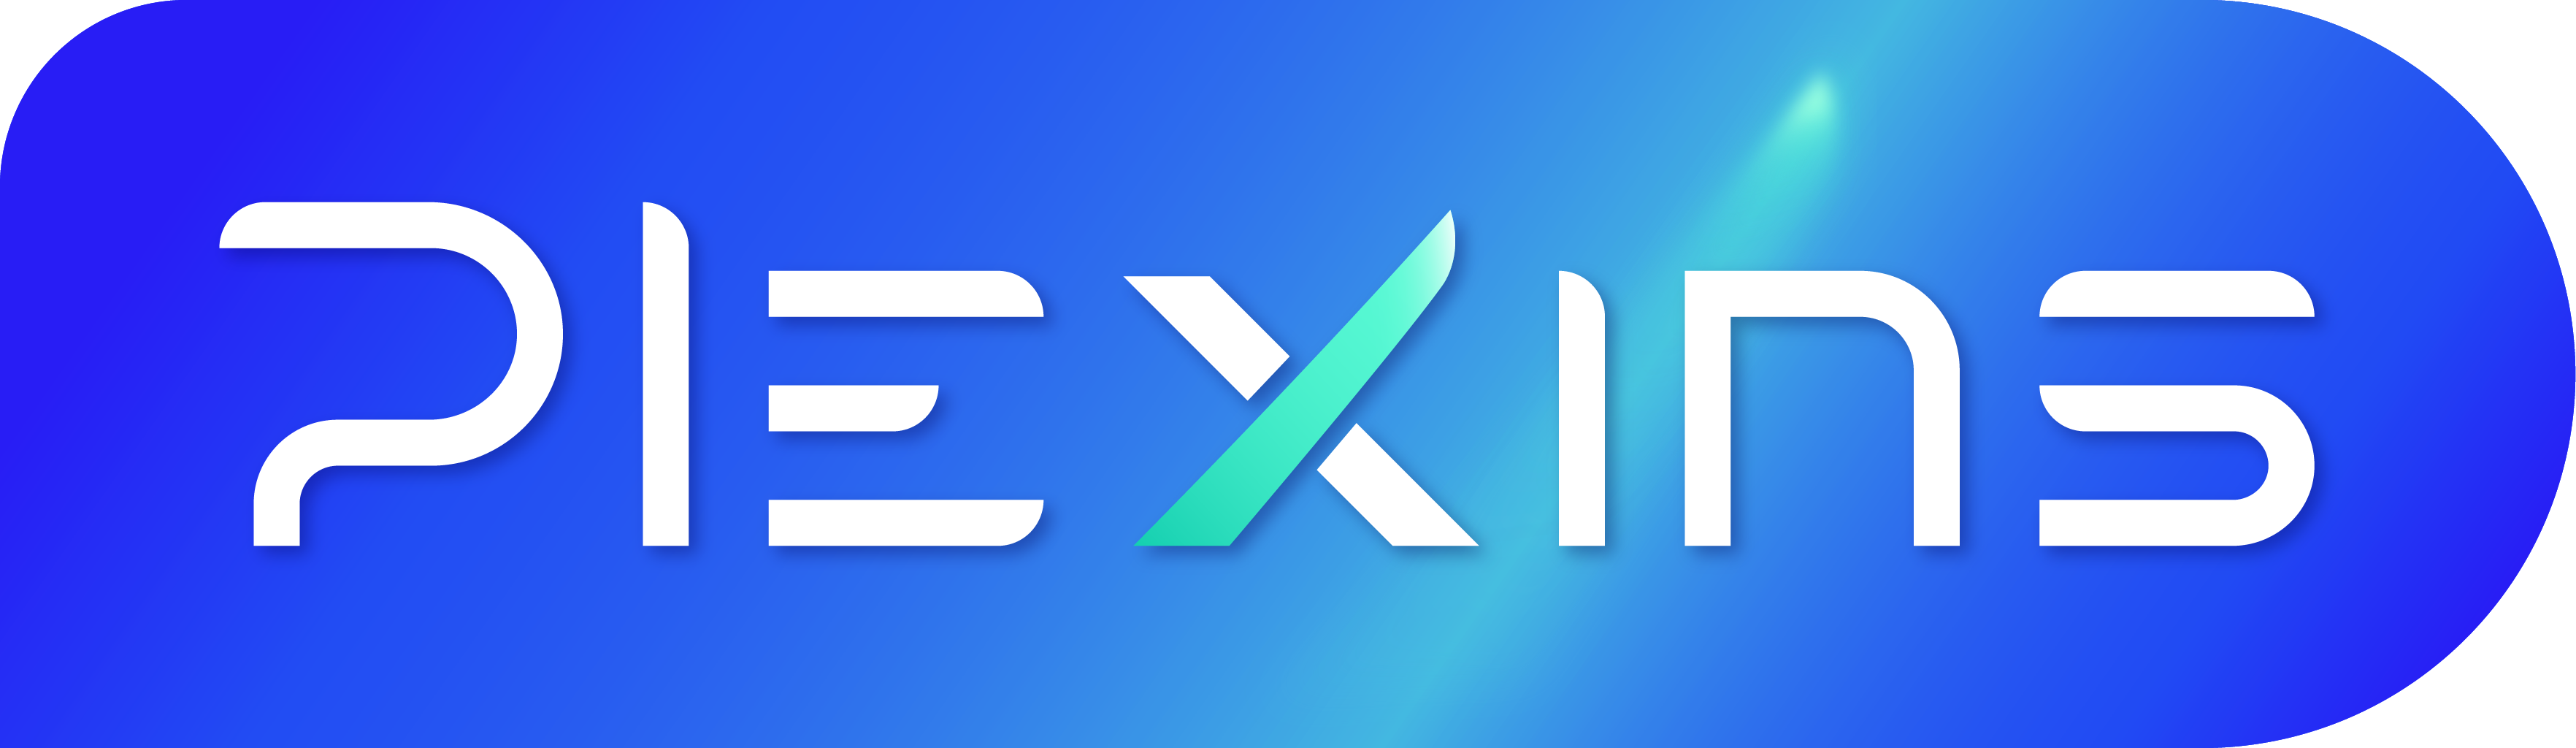 Plexins Brand Image Upgrade Announcement